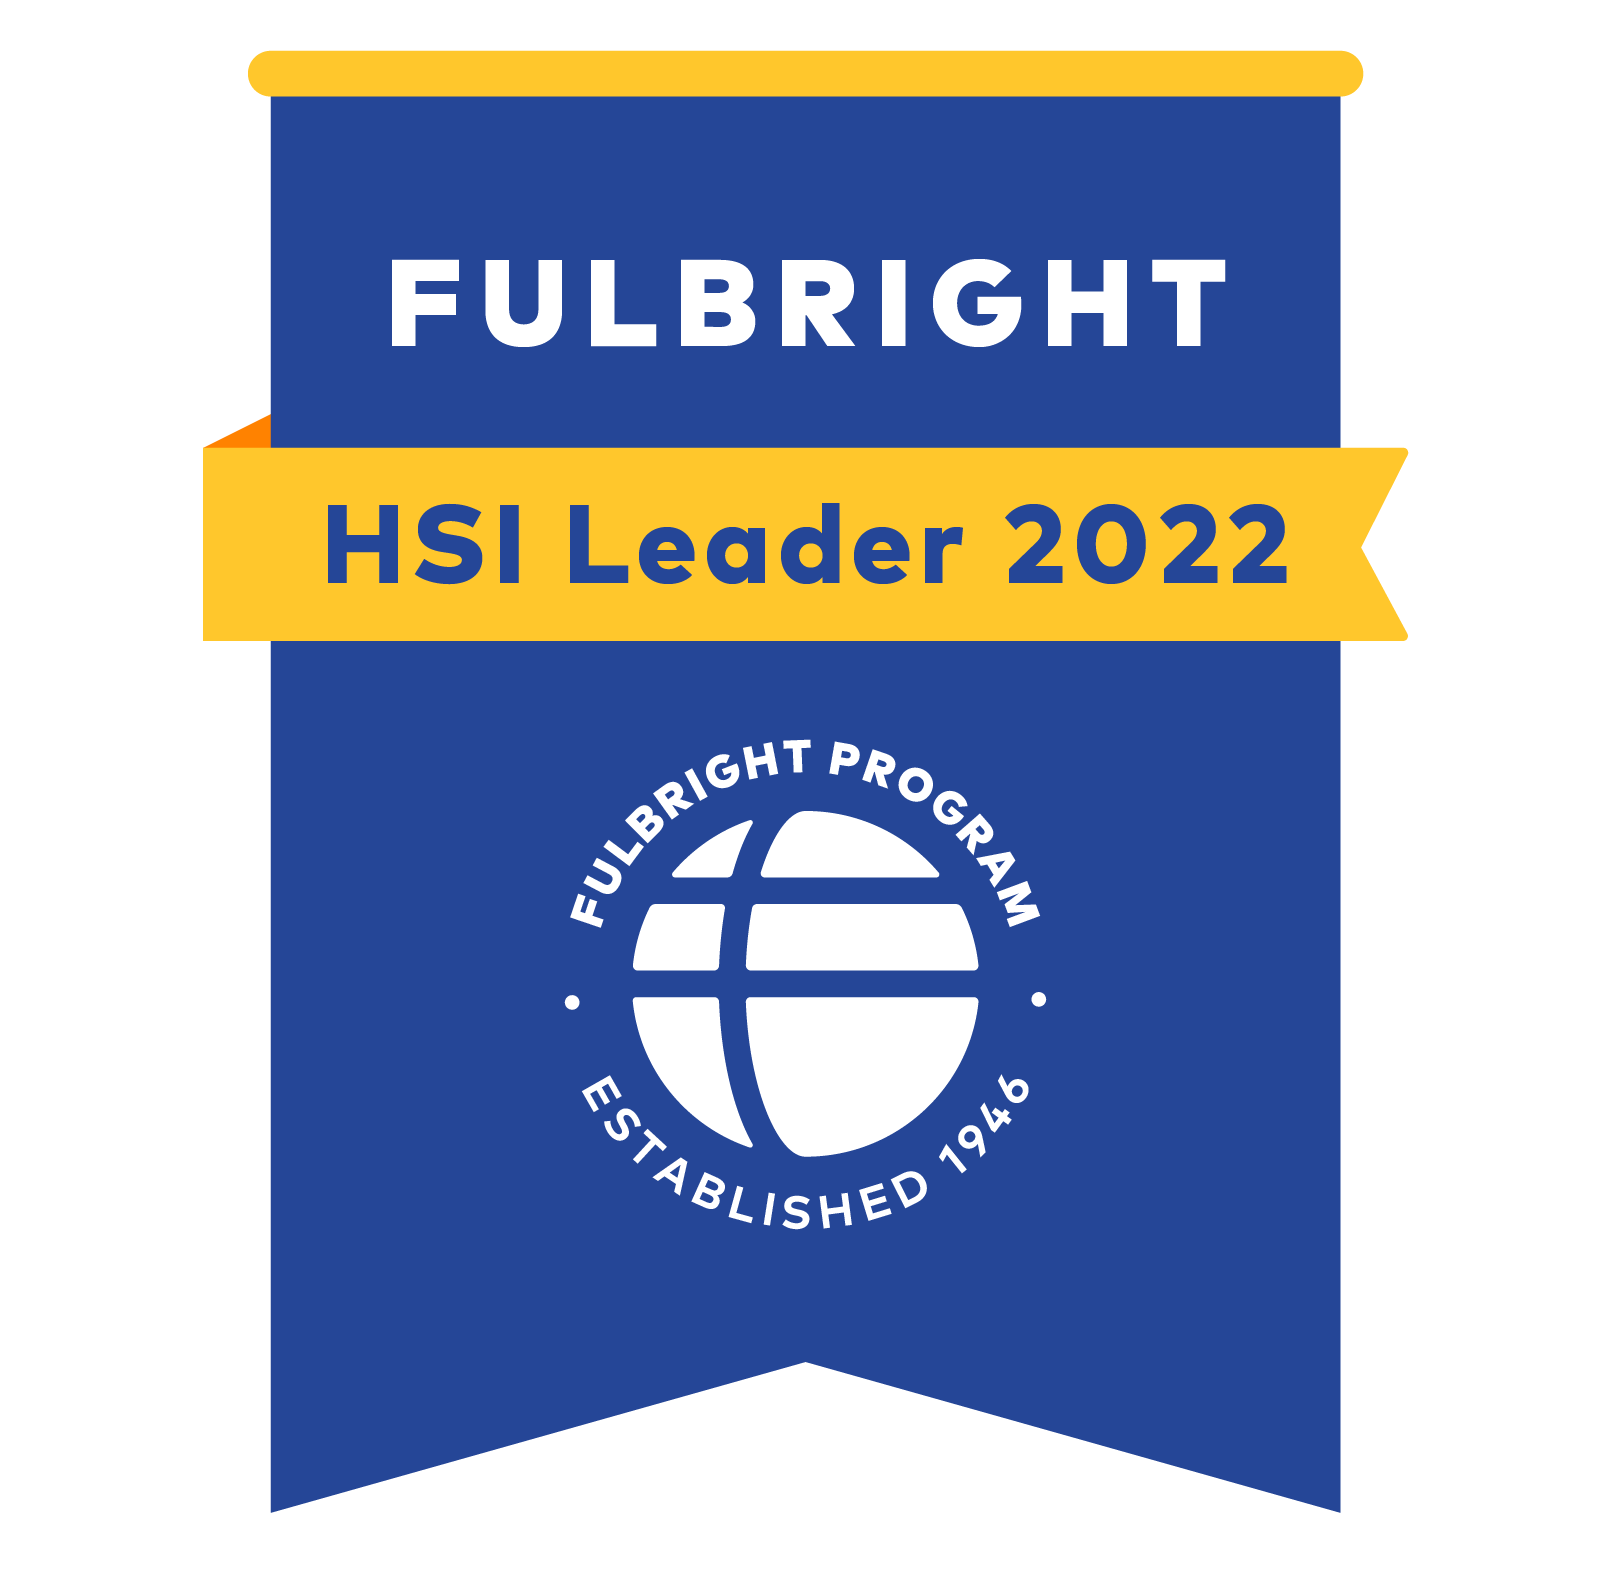 Fulbright HSI Leader 2022 badge